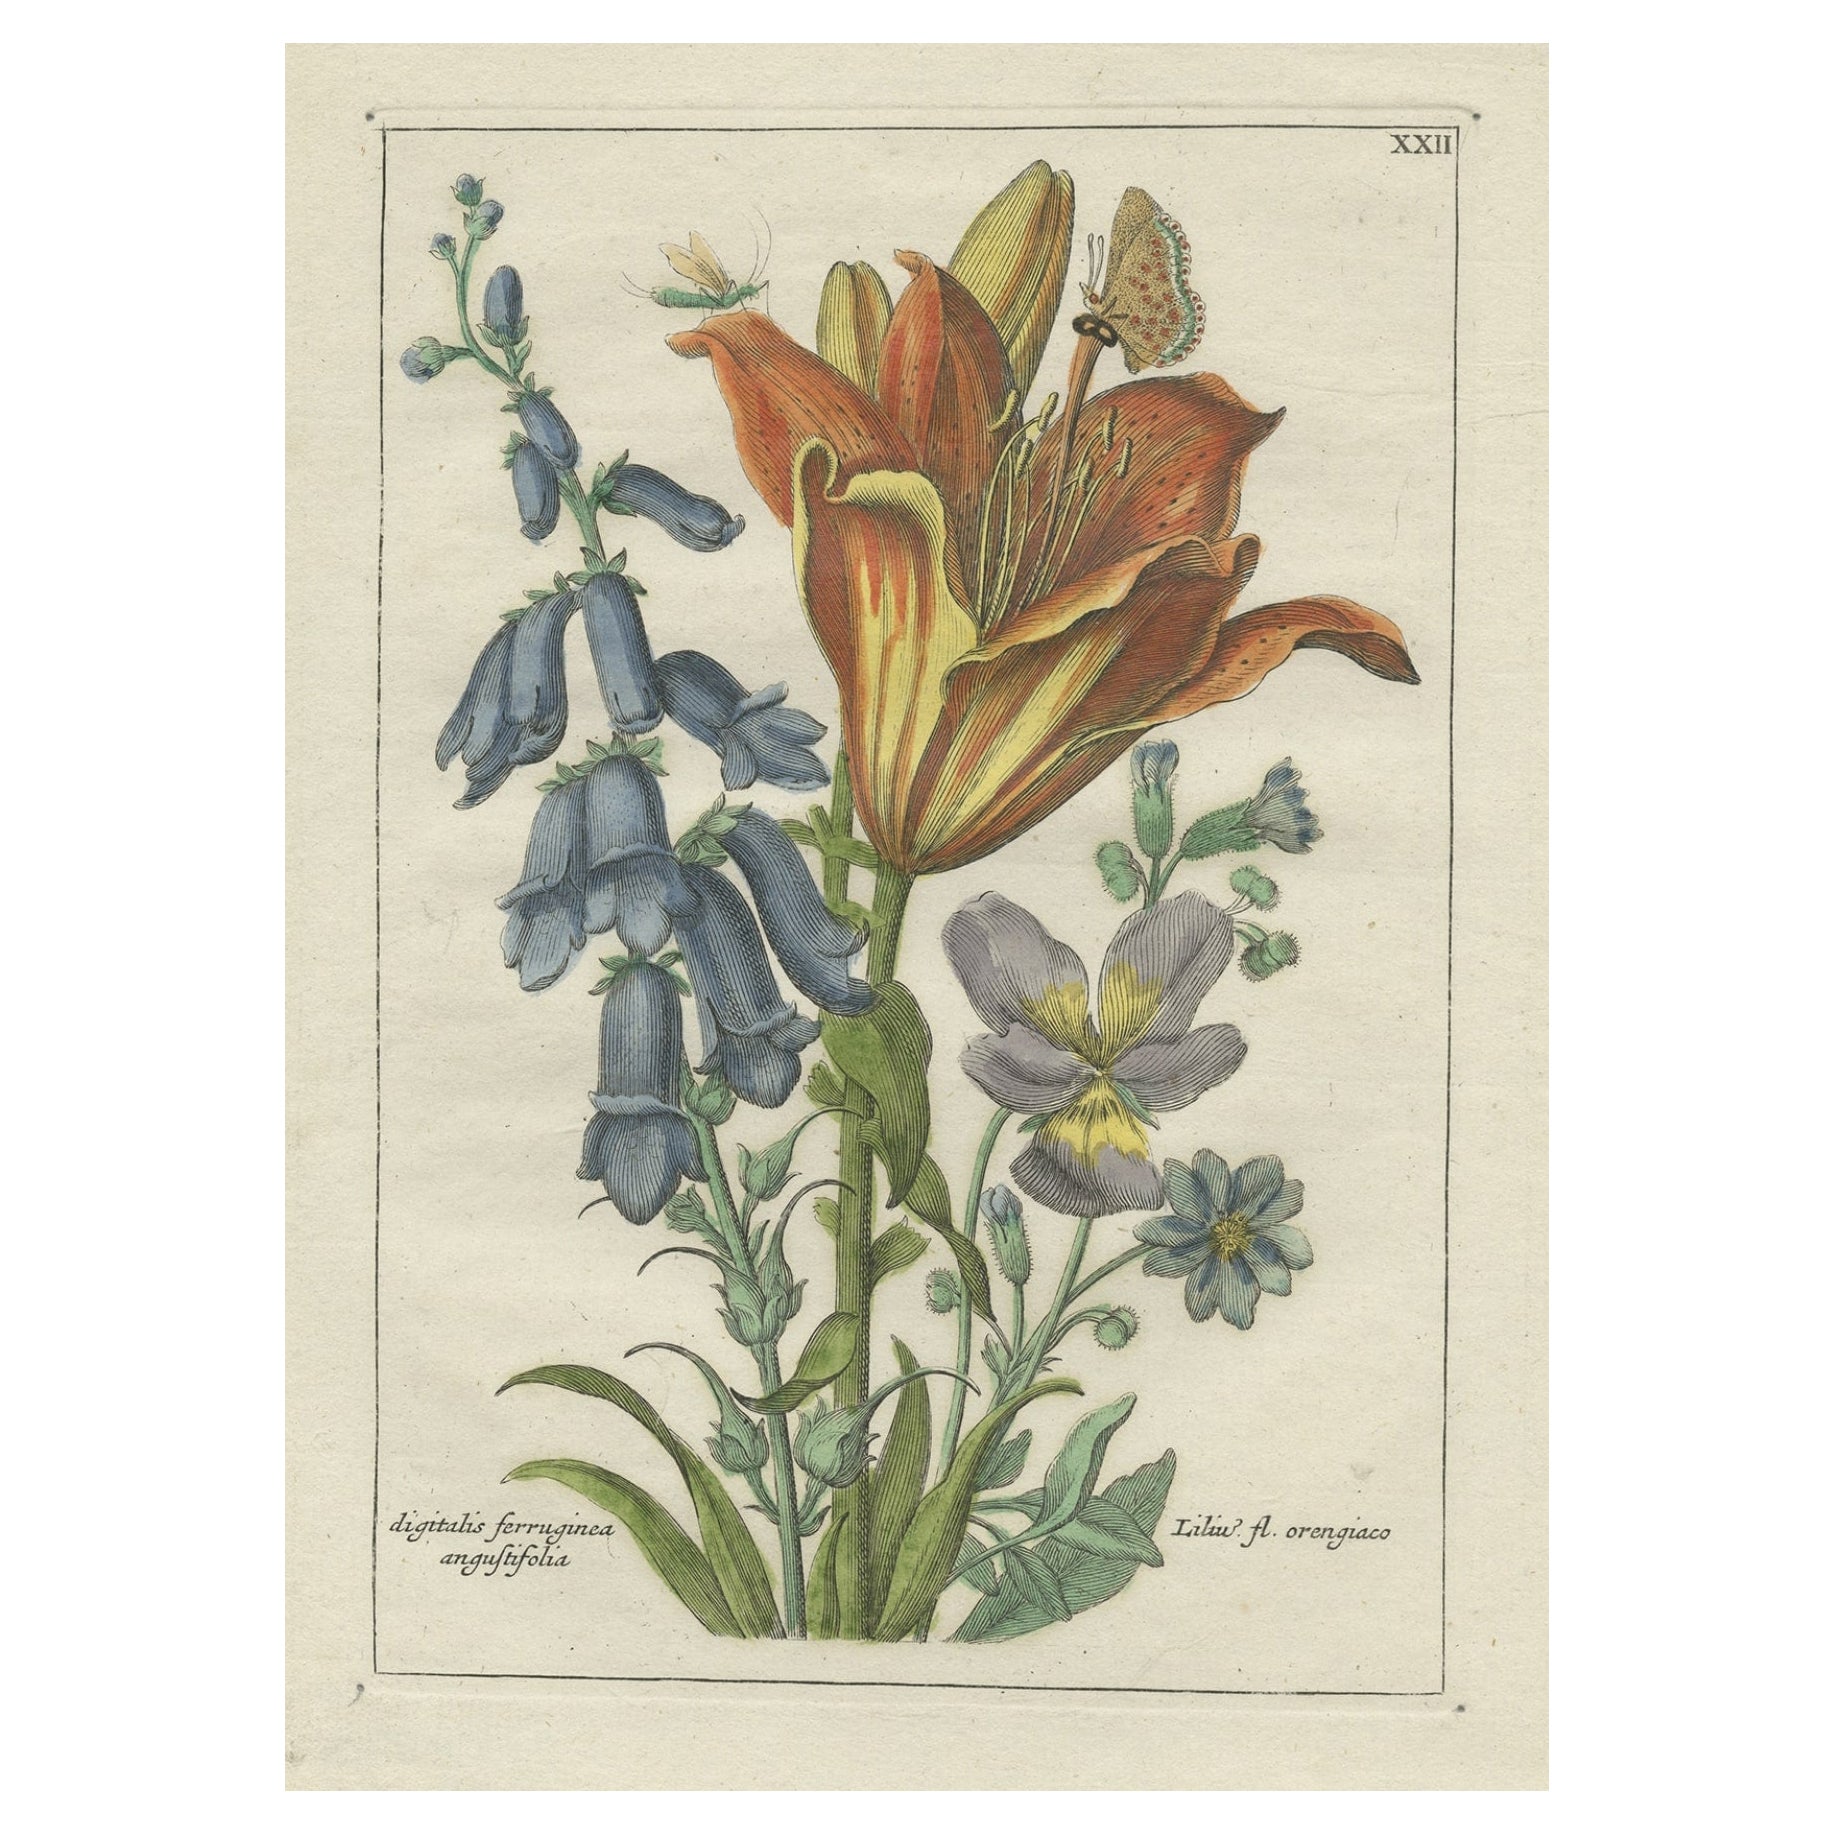 Old Botany Print of the Orange Lily & Digitalis Ferruginea Angustifolia, 1794 For Sale